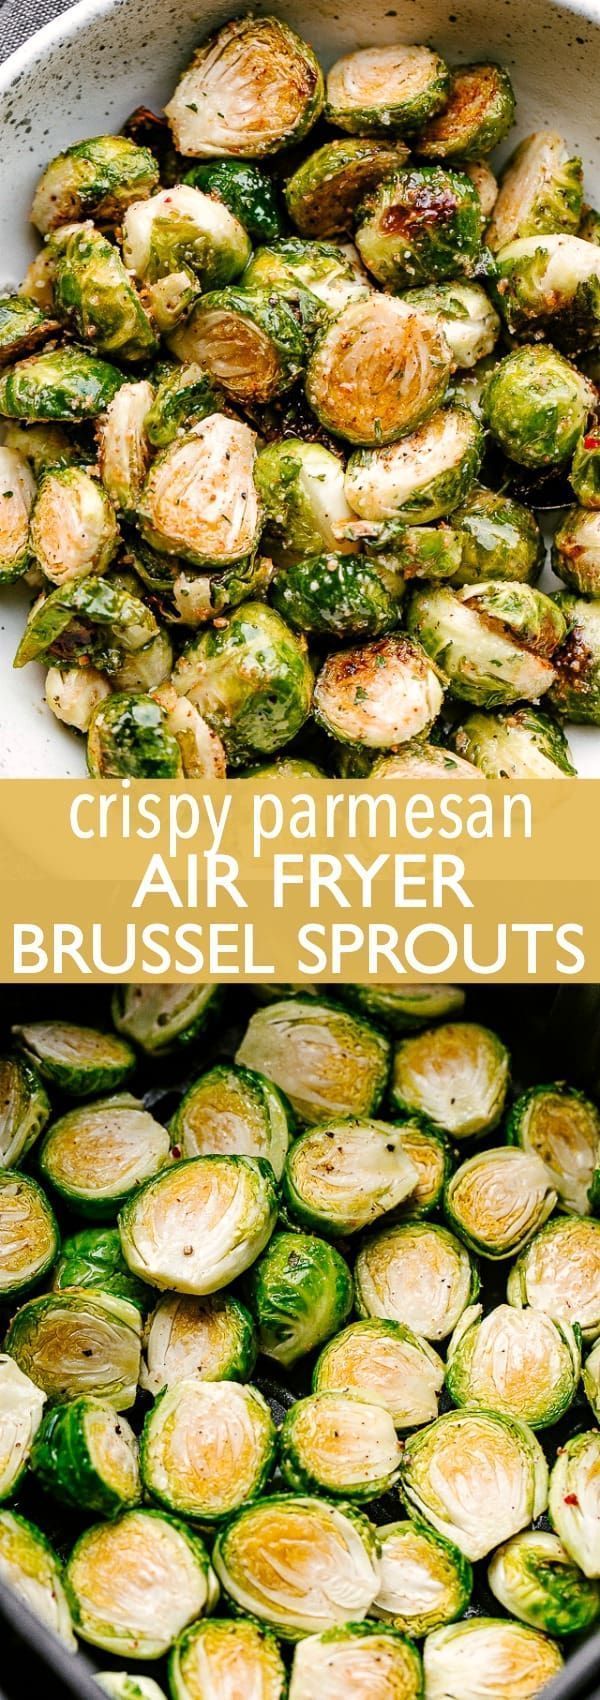 Crispy Parmesan Air Fryer Brussel Sprouts -   19 air fryer recipes healthy low sodium ideas